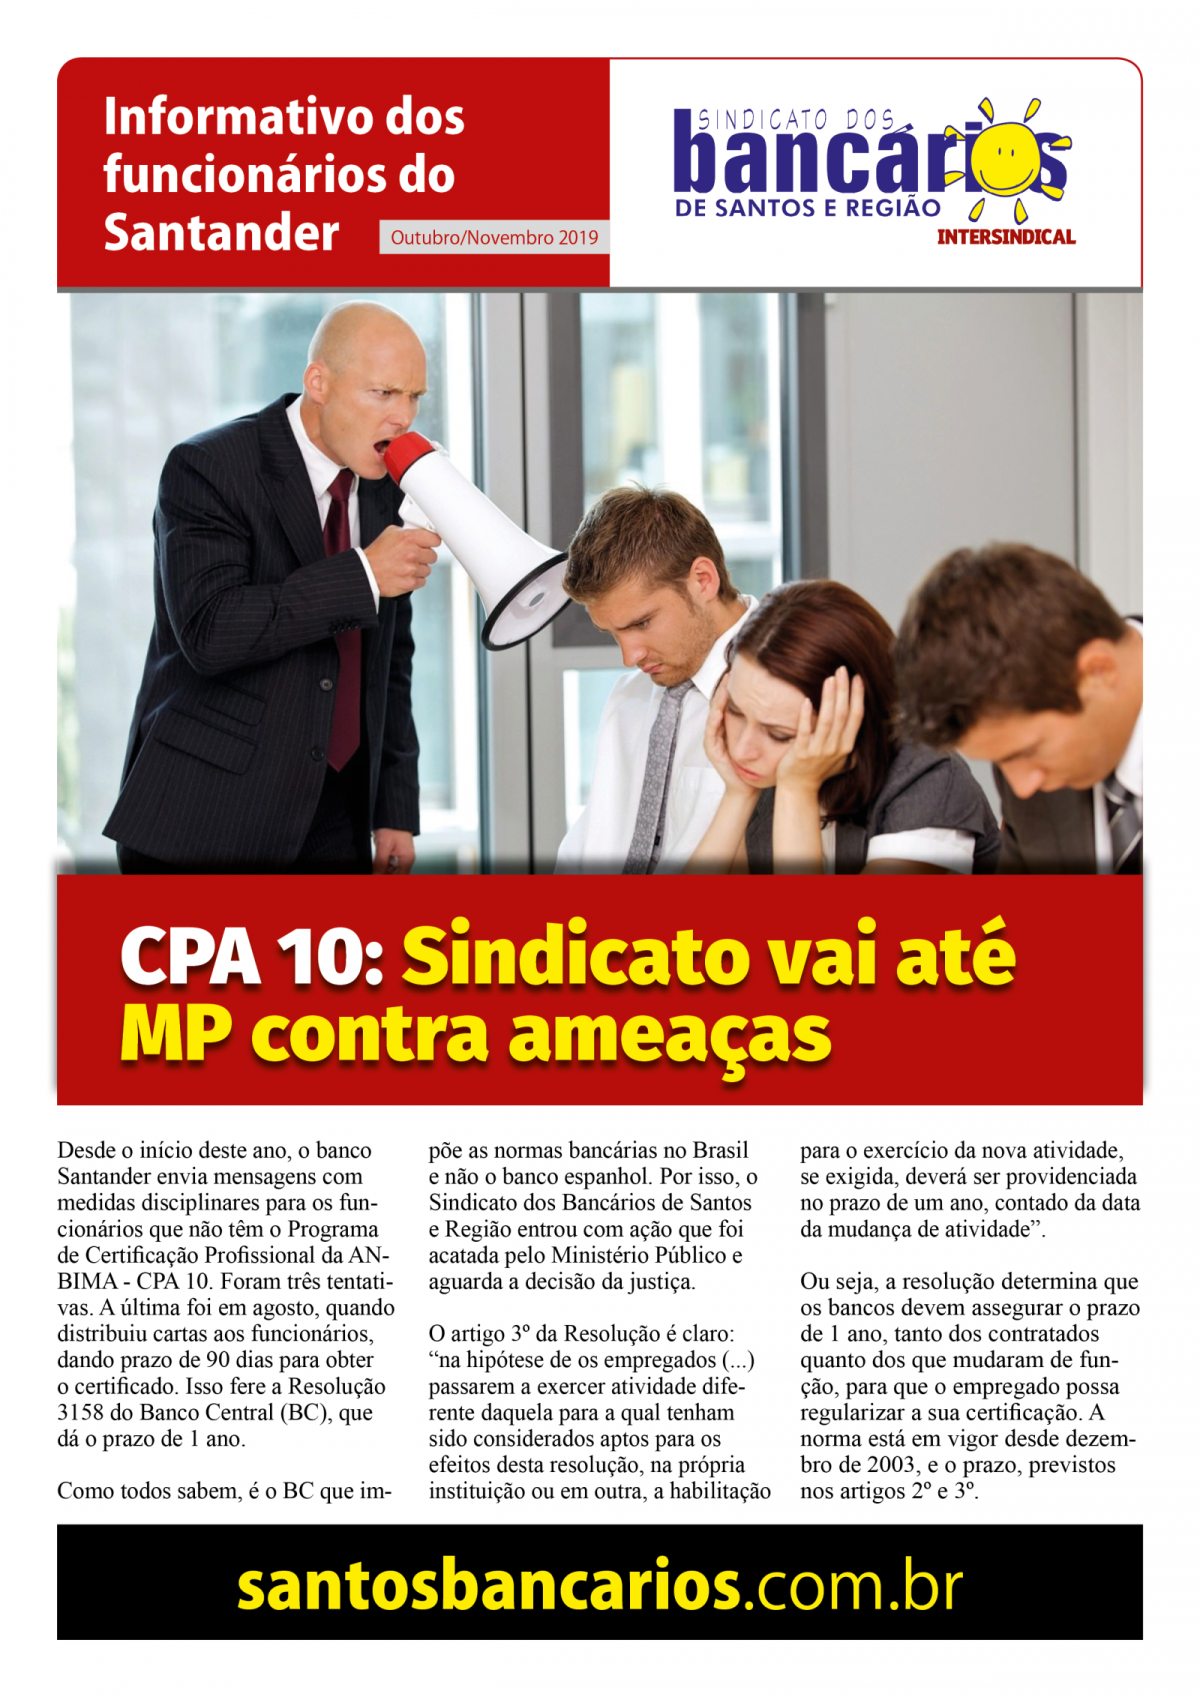 CPA 10: Sindicato vai até MP contra ameaças